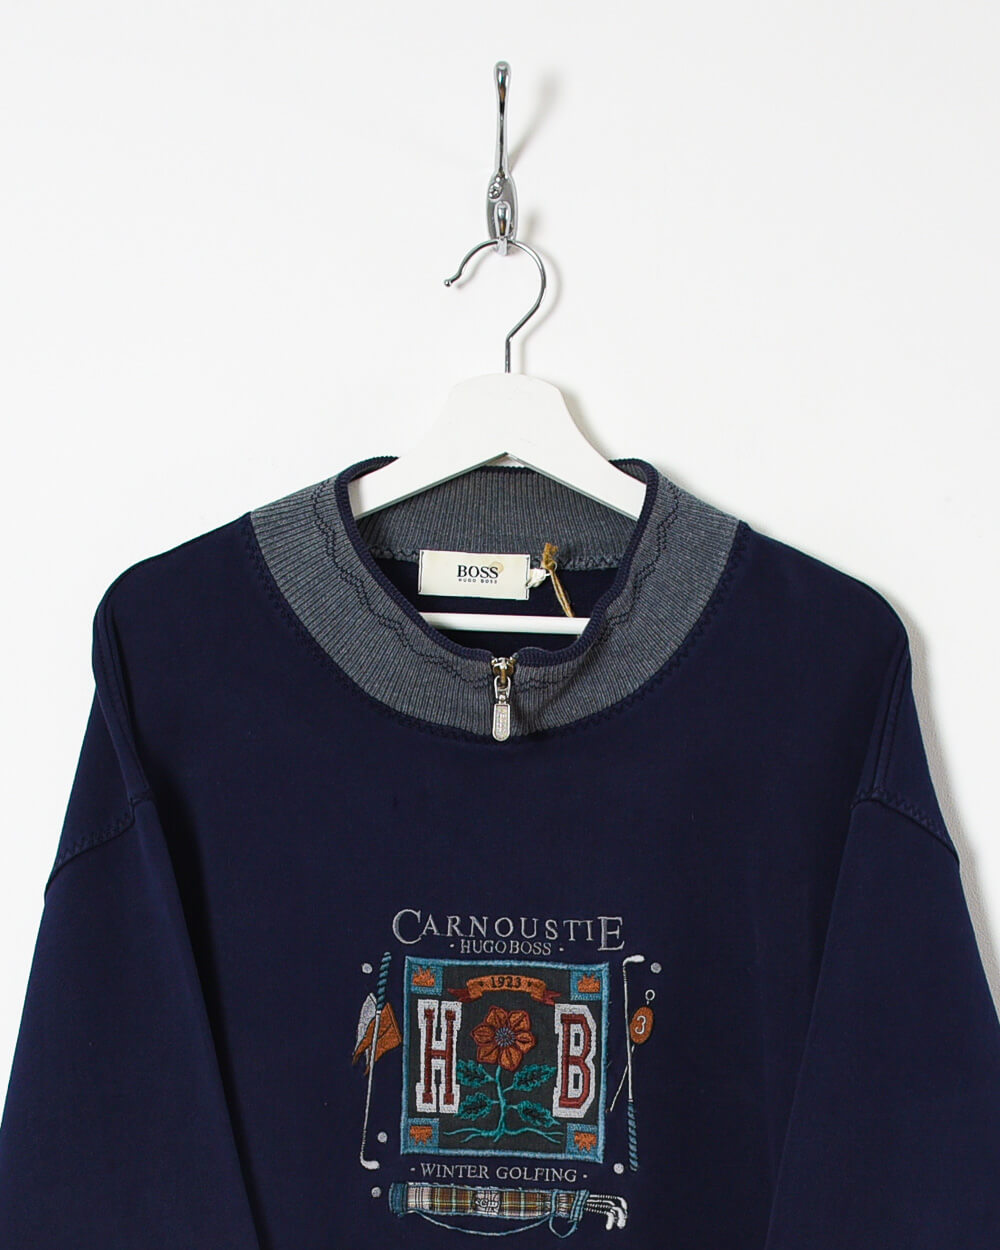 Hugo Boss Carnoustte Winter Golfing Sweatshirt - Large - Domno Vintage 90s, 80s, 00s Retro and Vintage Clothing 